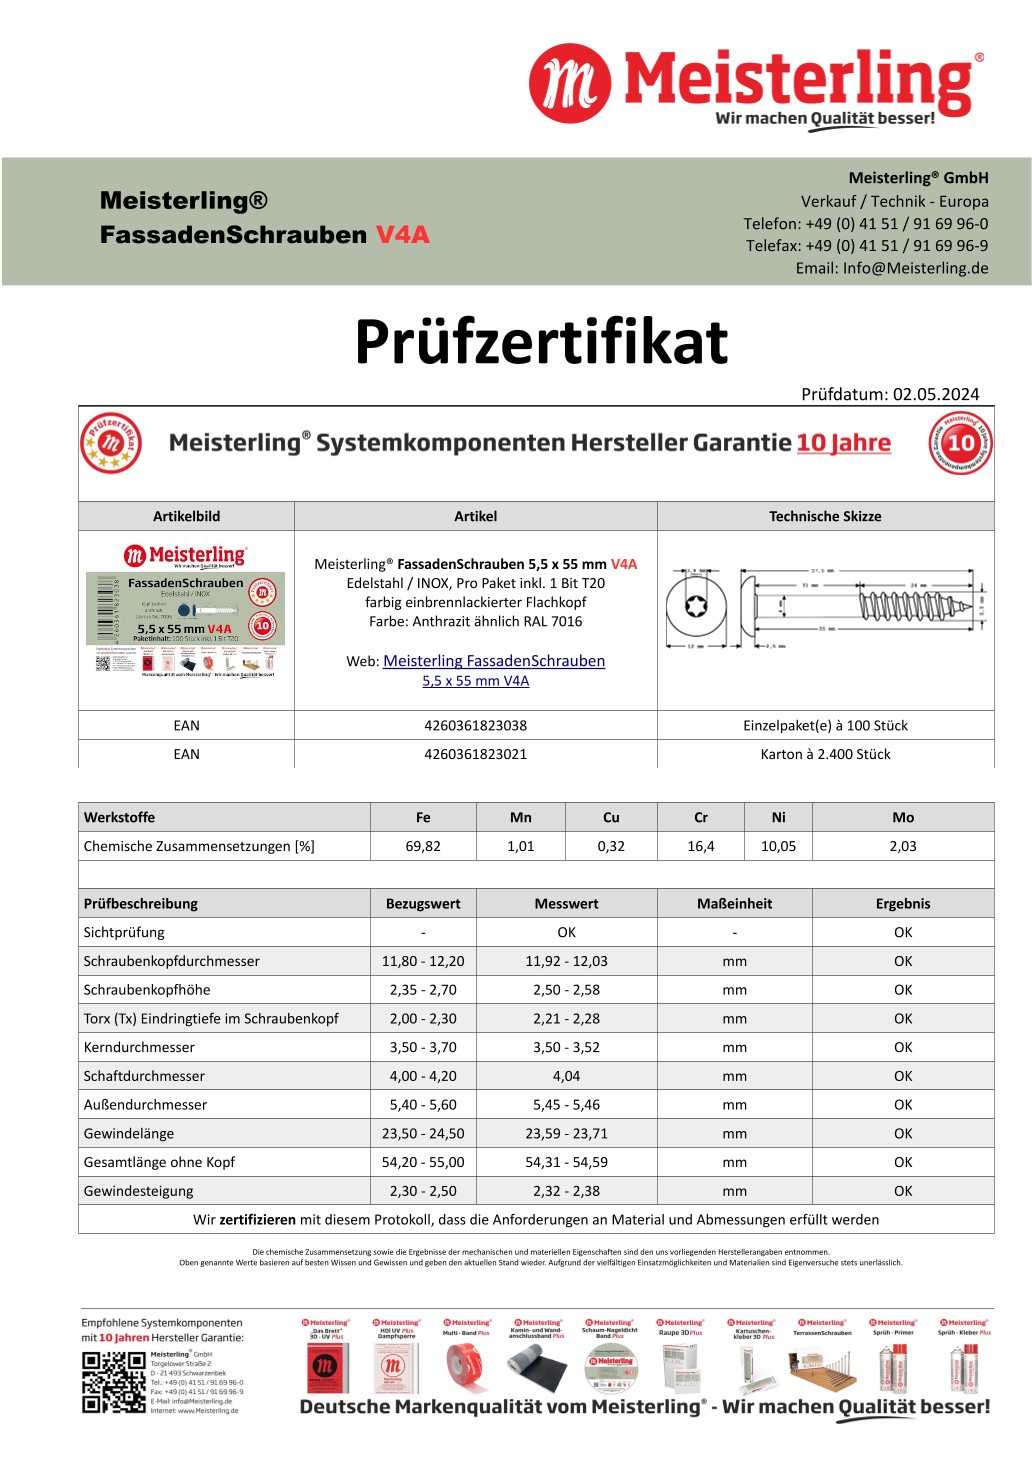 Prüfzertifikat Meisterling® FassadenSchrauben 5,5 x 55 mm V4a anthrazit